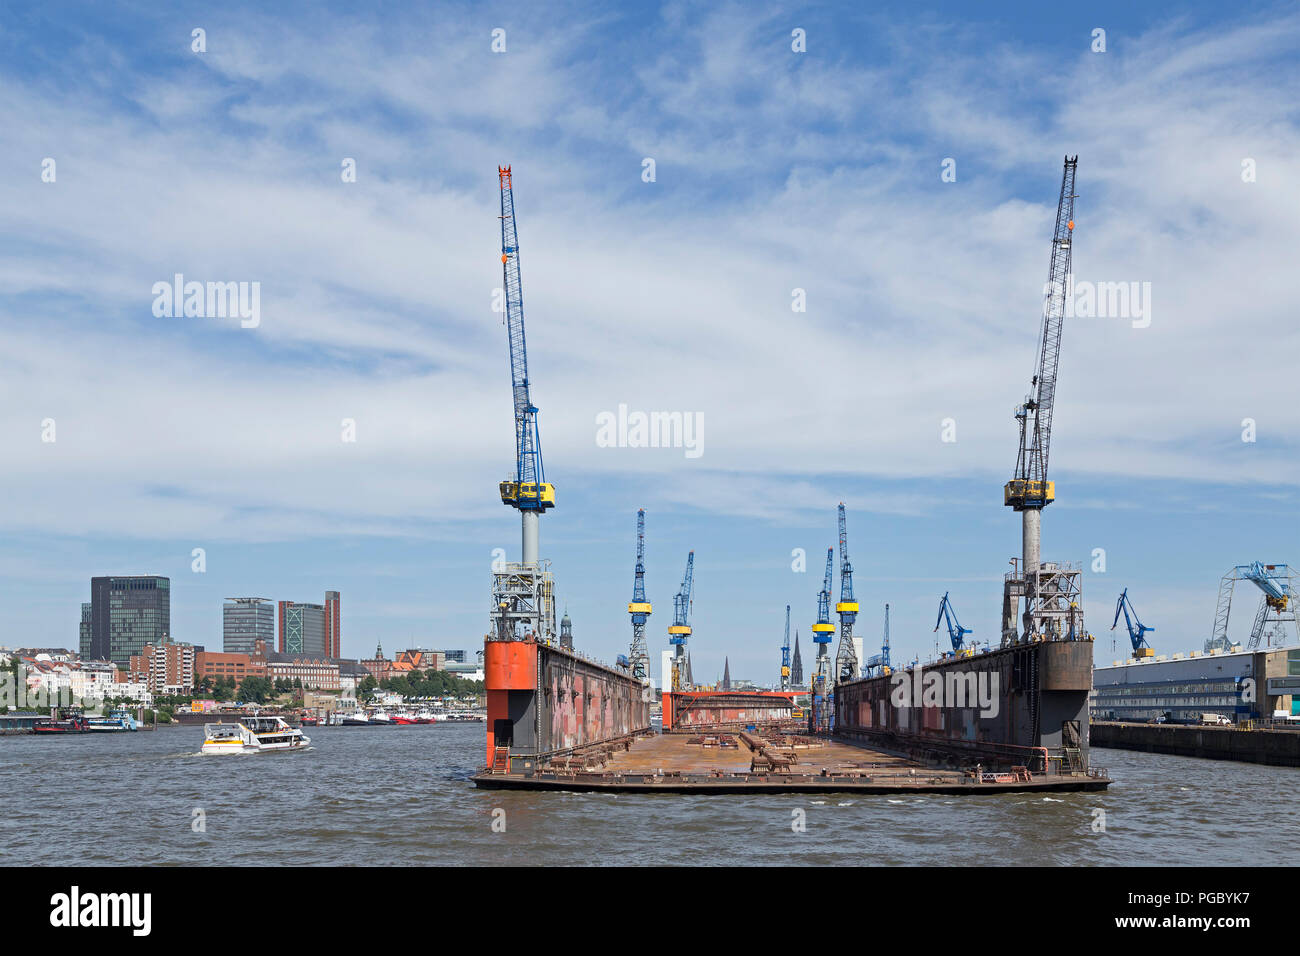 Blohm + Voss shipyard, Harbour, Hamburg, Germany Stock Photo